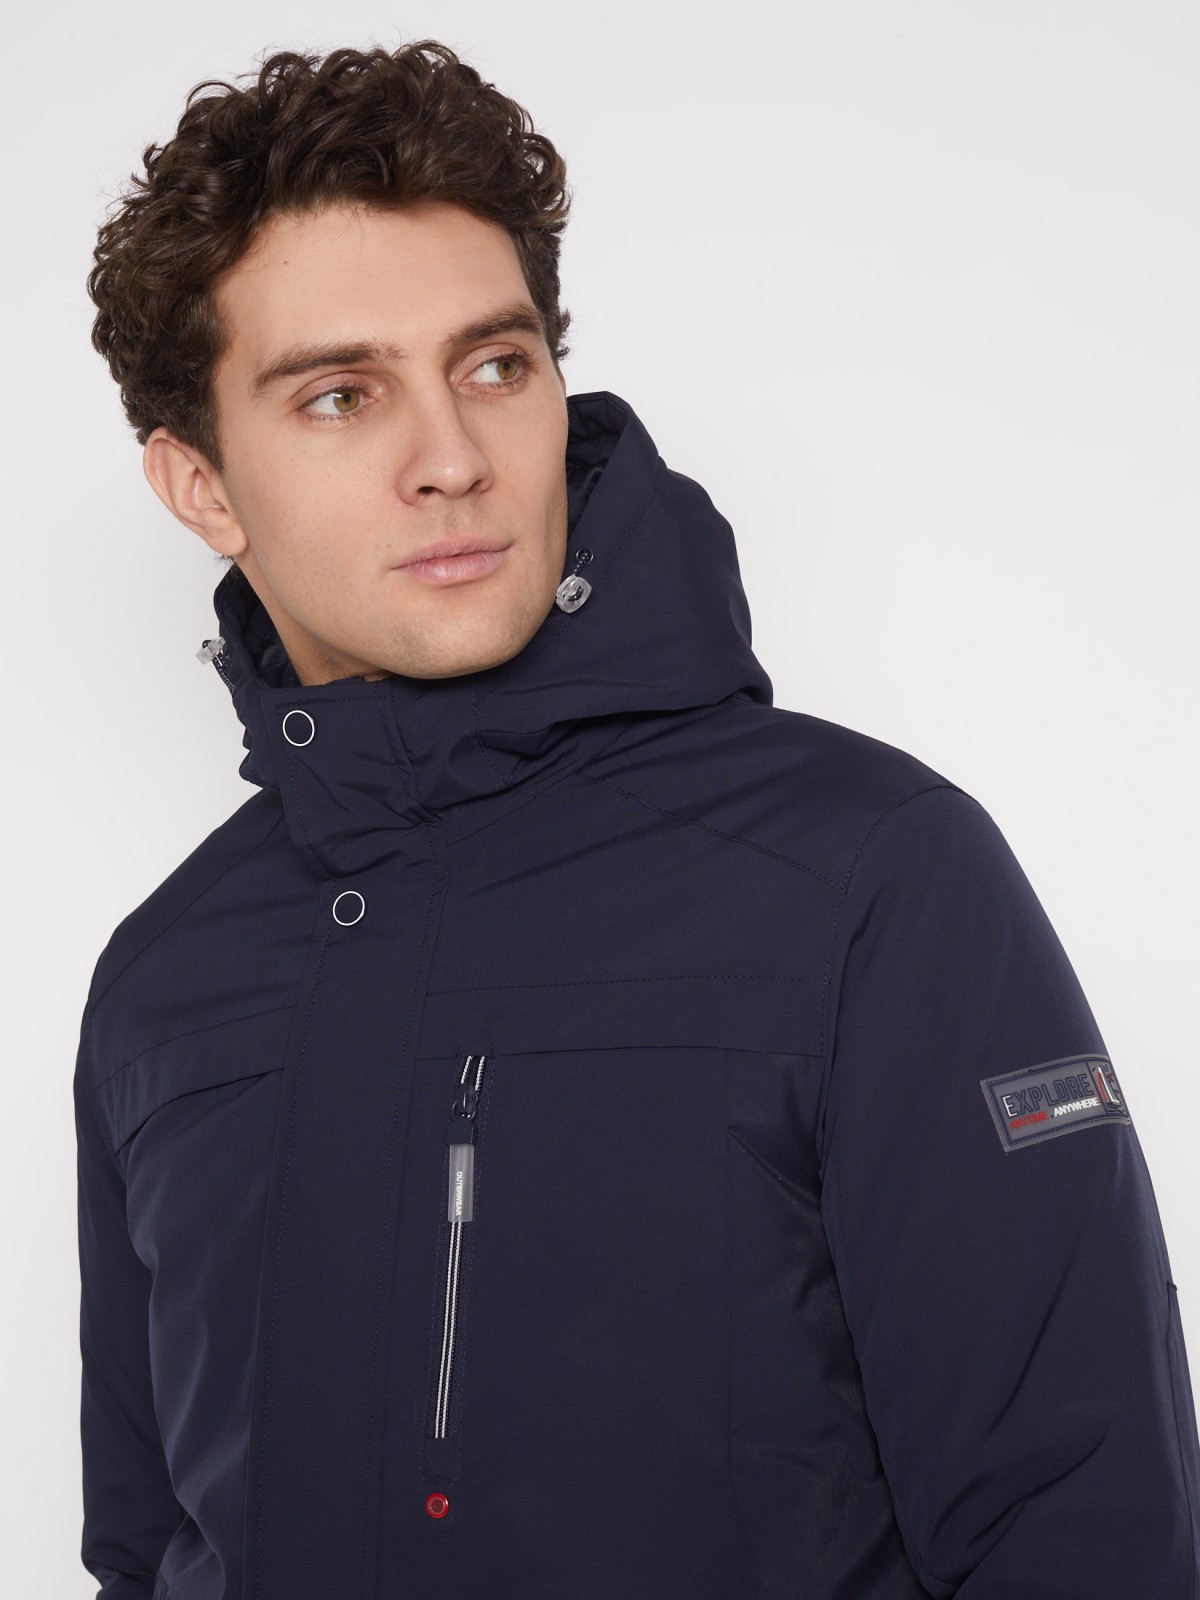 Утеплённая куртка с капюшоном zolla 012135102104, цвет темно-синий, размер M - фото 4